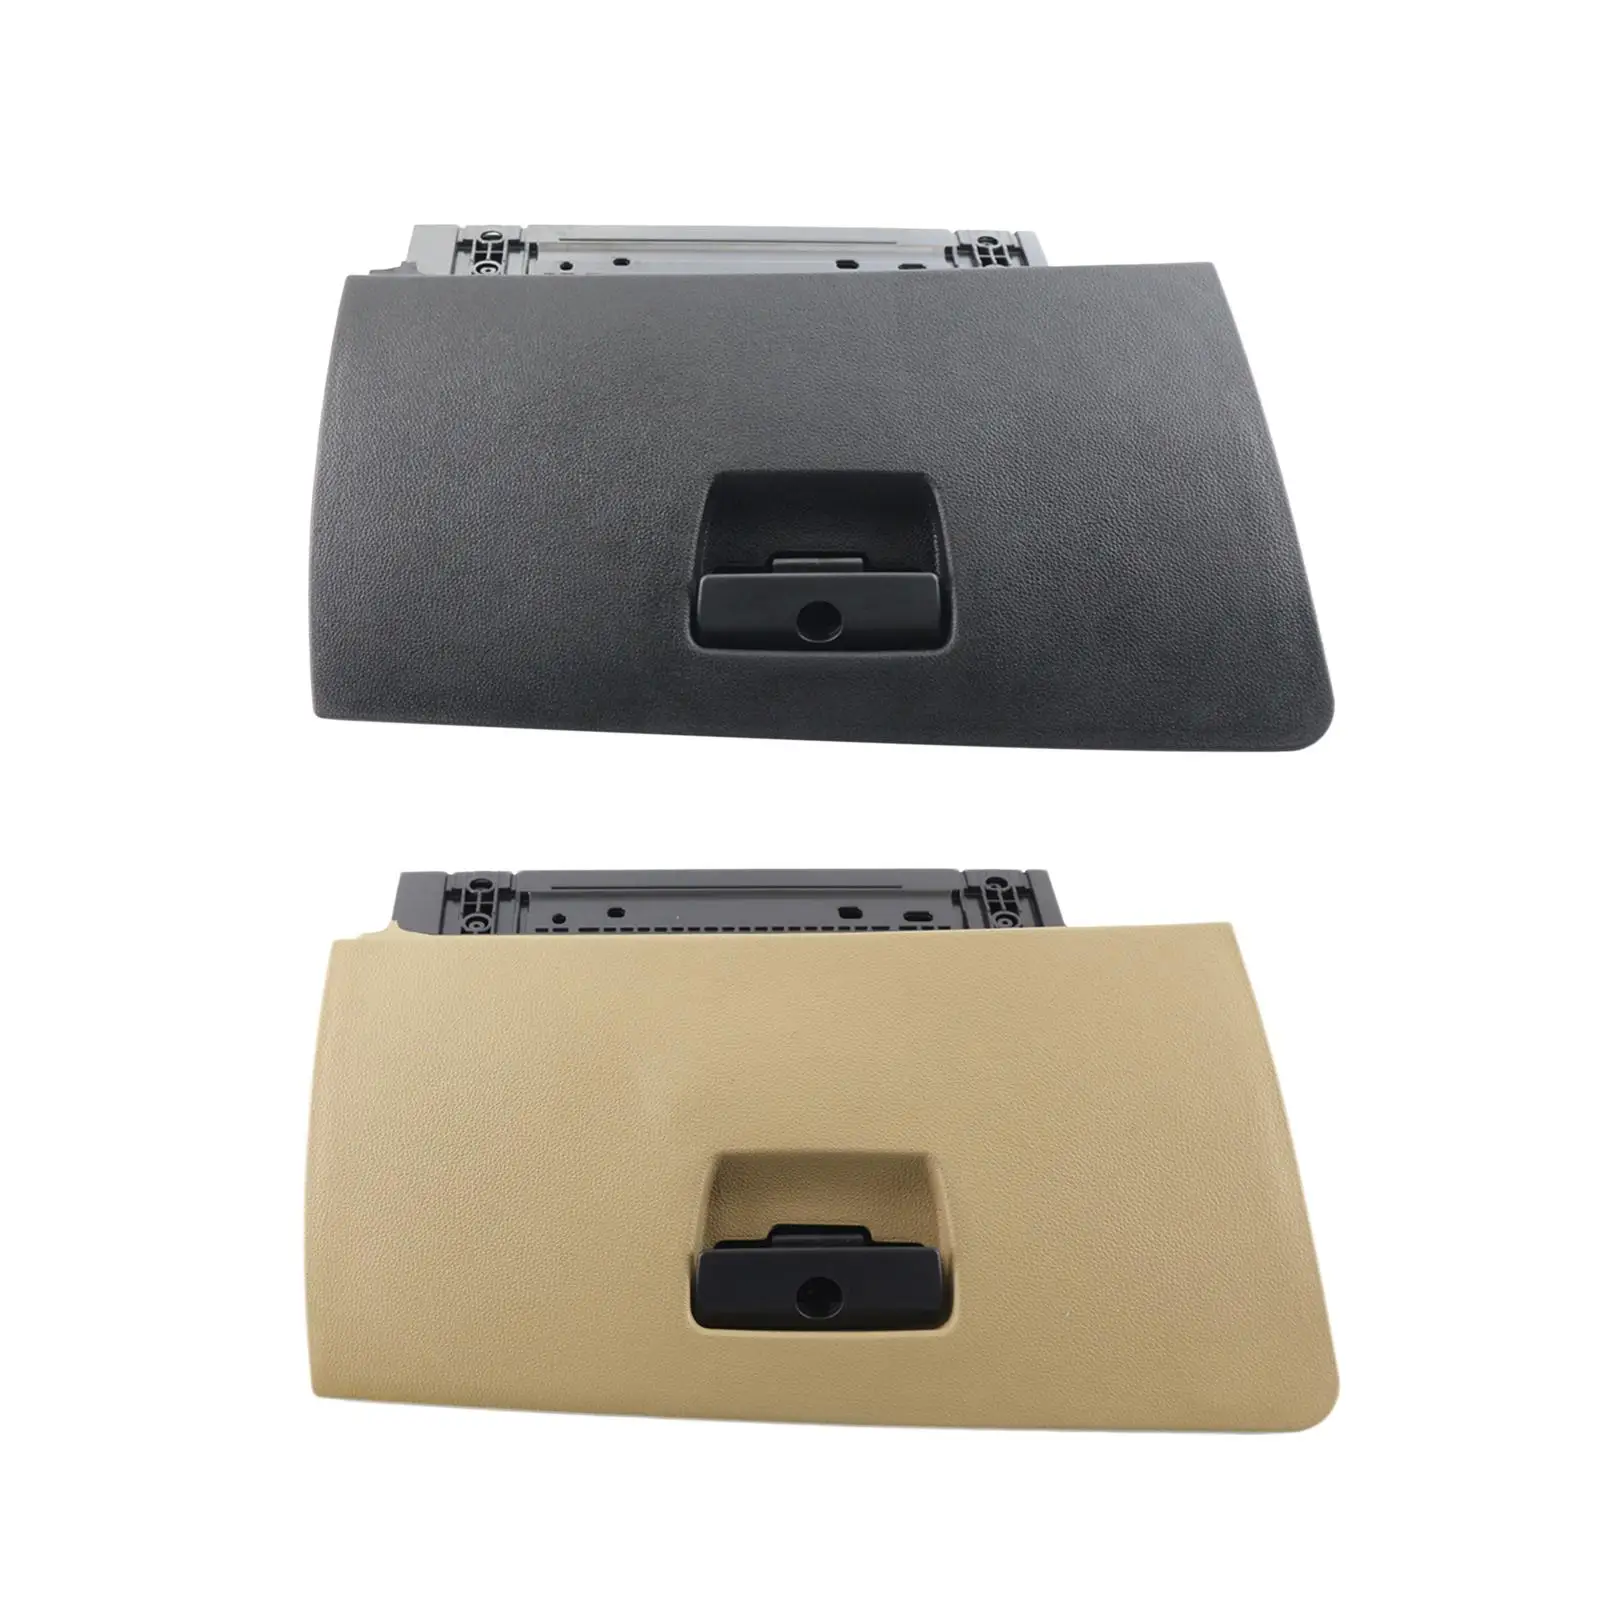 Glovebox Accessories Parts Practical Professional Portable Replaces Glove Box Storage Compartment for BMW E90 D91 E92 06-13